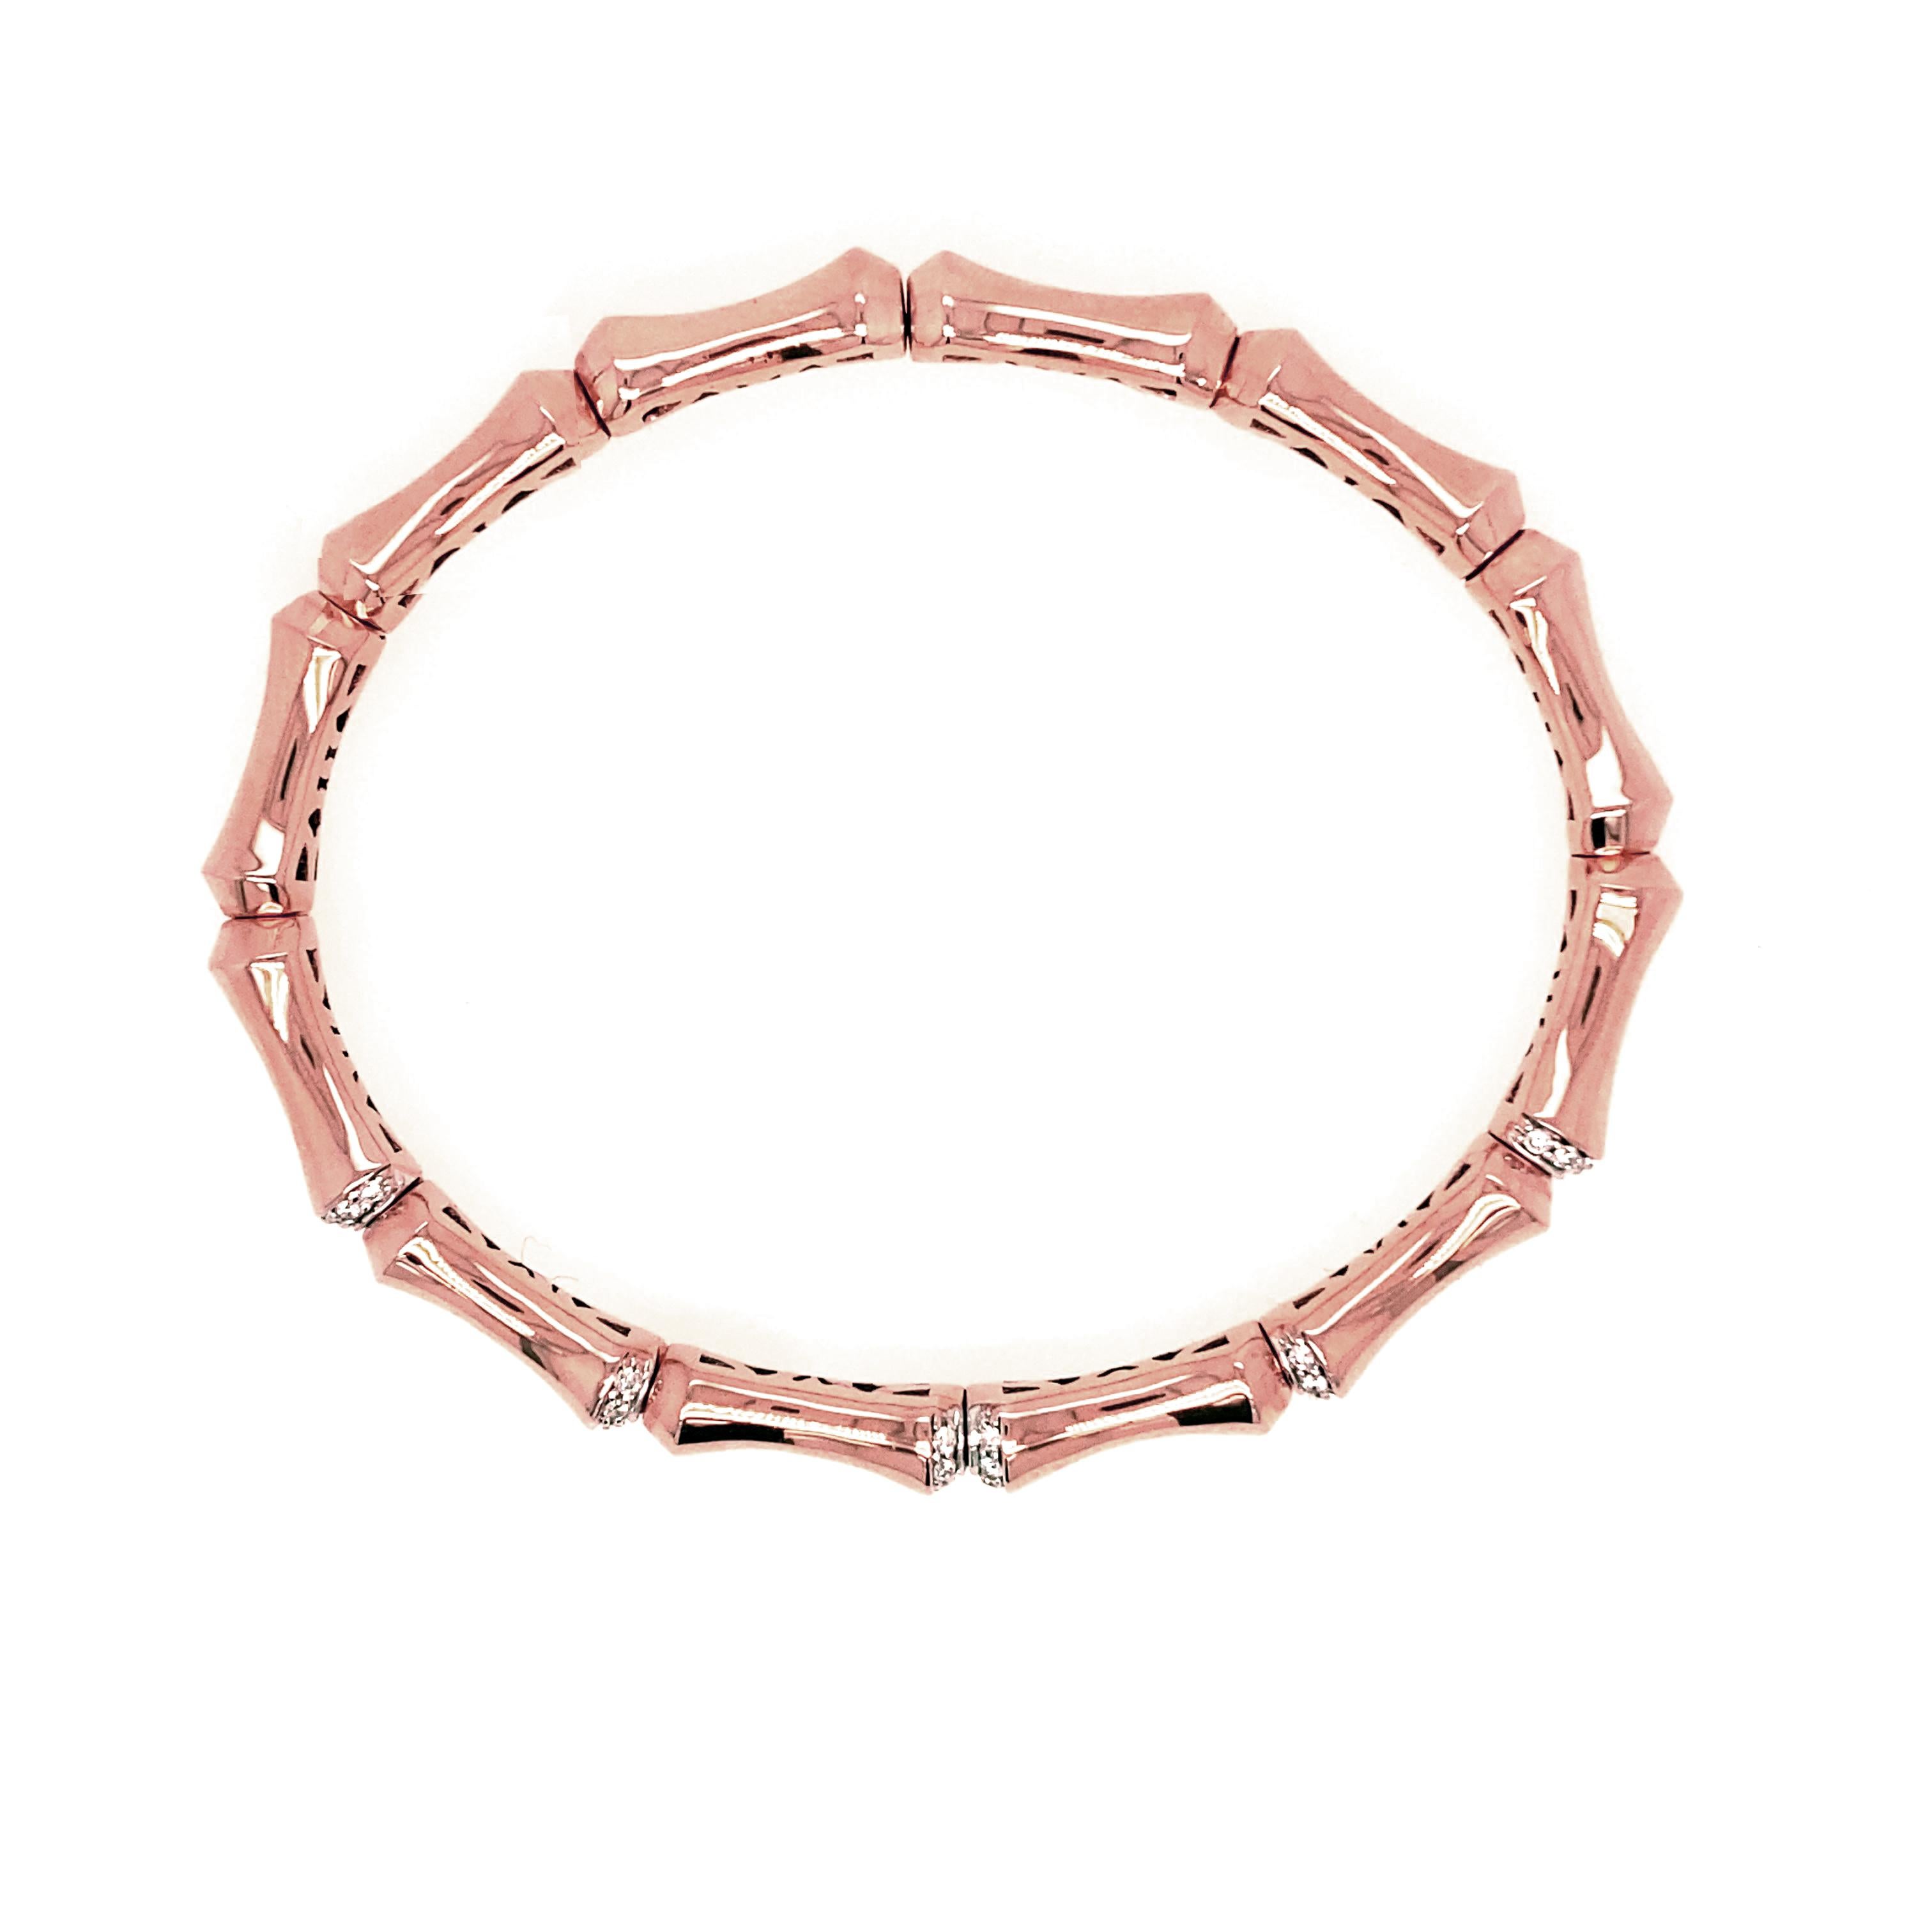 14 karat rose gold memory cuff bracelet with 36 round diamonds 0.28 carat total weight.